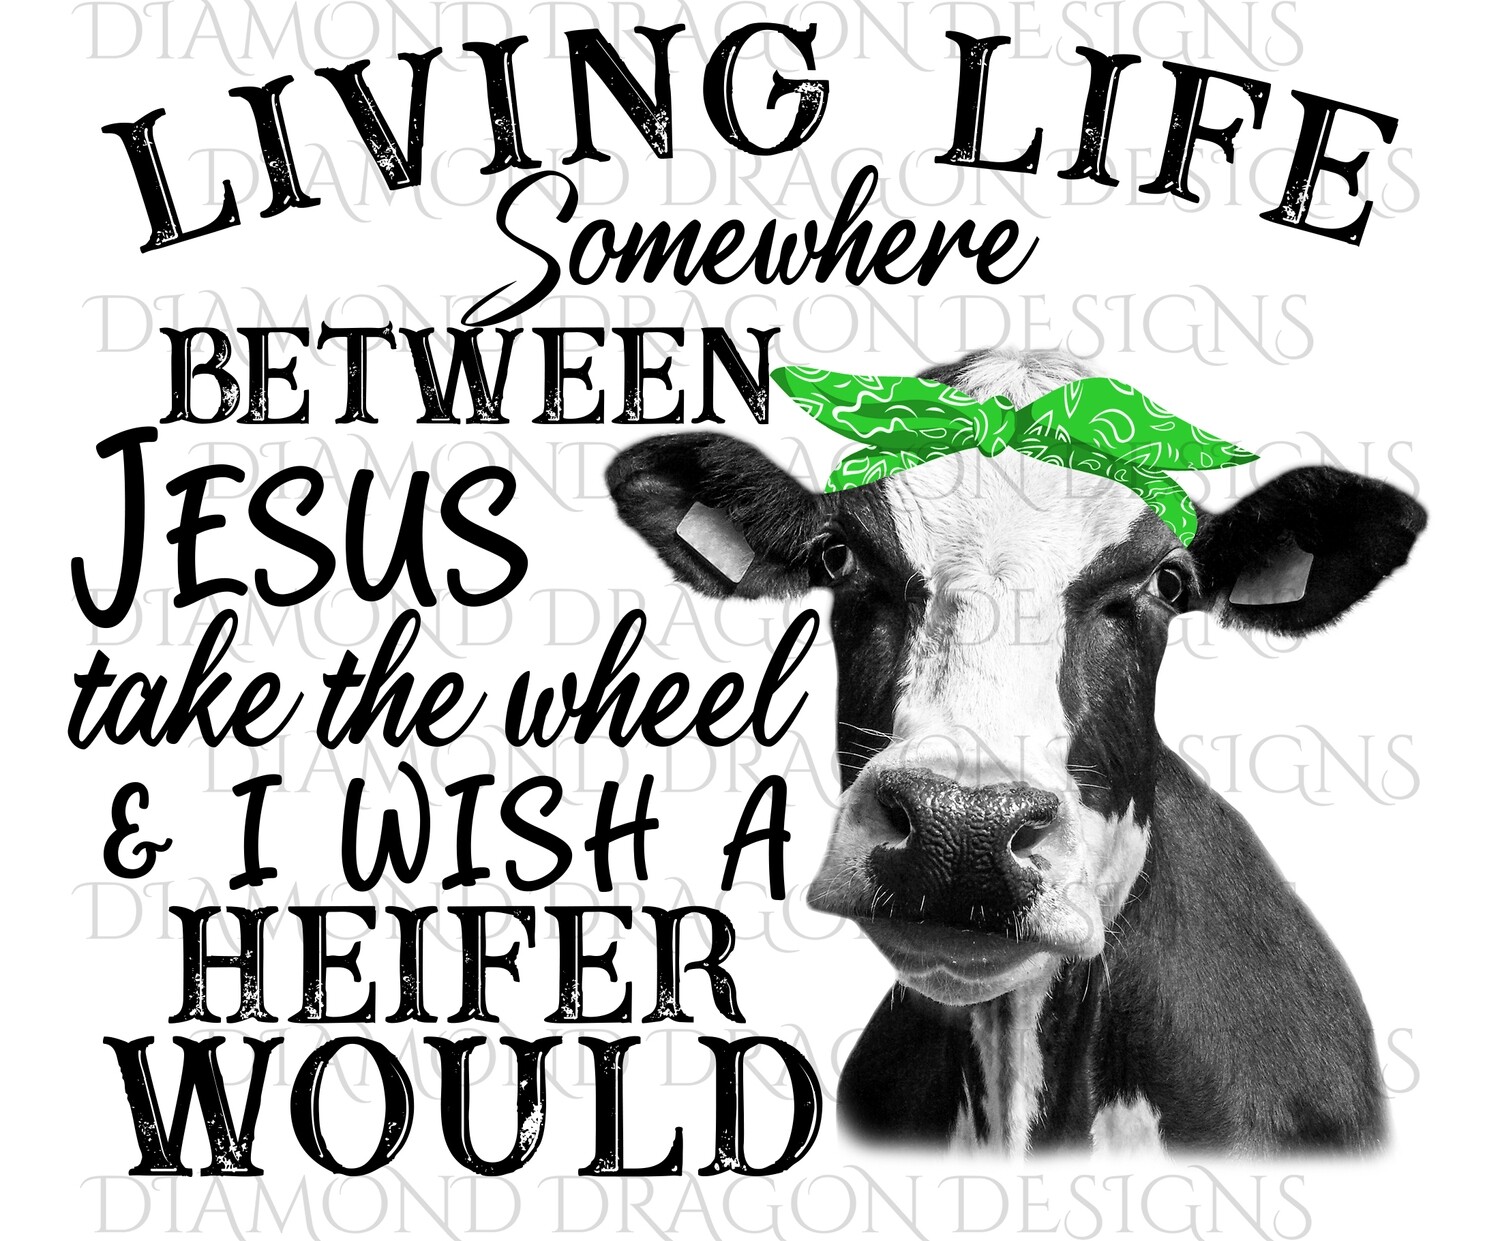 Cows - Heifer, Living Life Somewhere Between Jesus Take the Wheel & I Wish a Heifer Would, Green Bandana